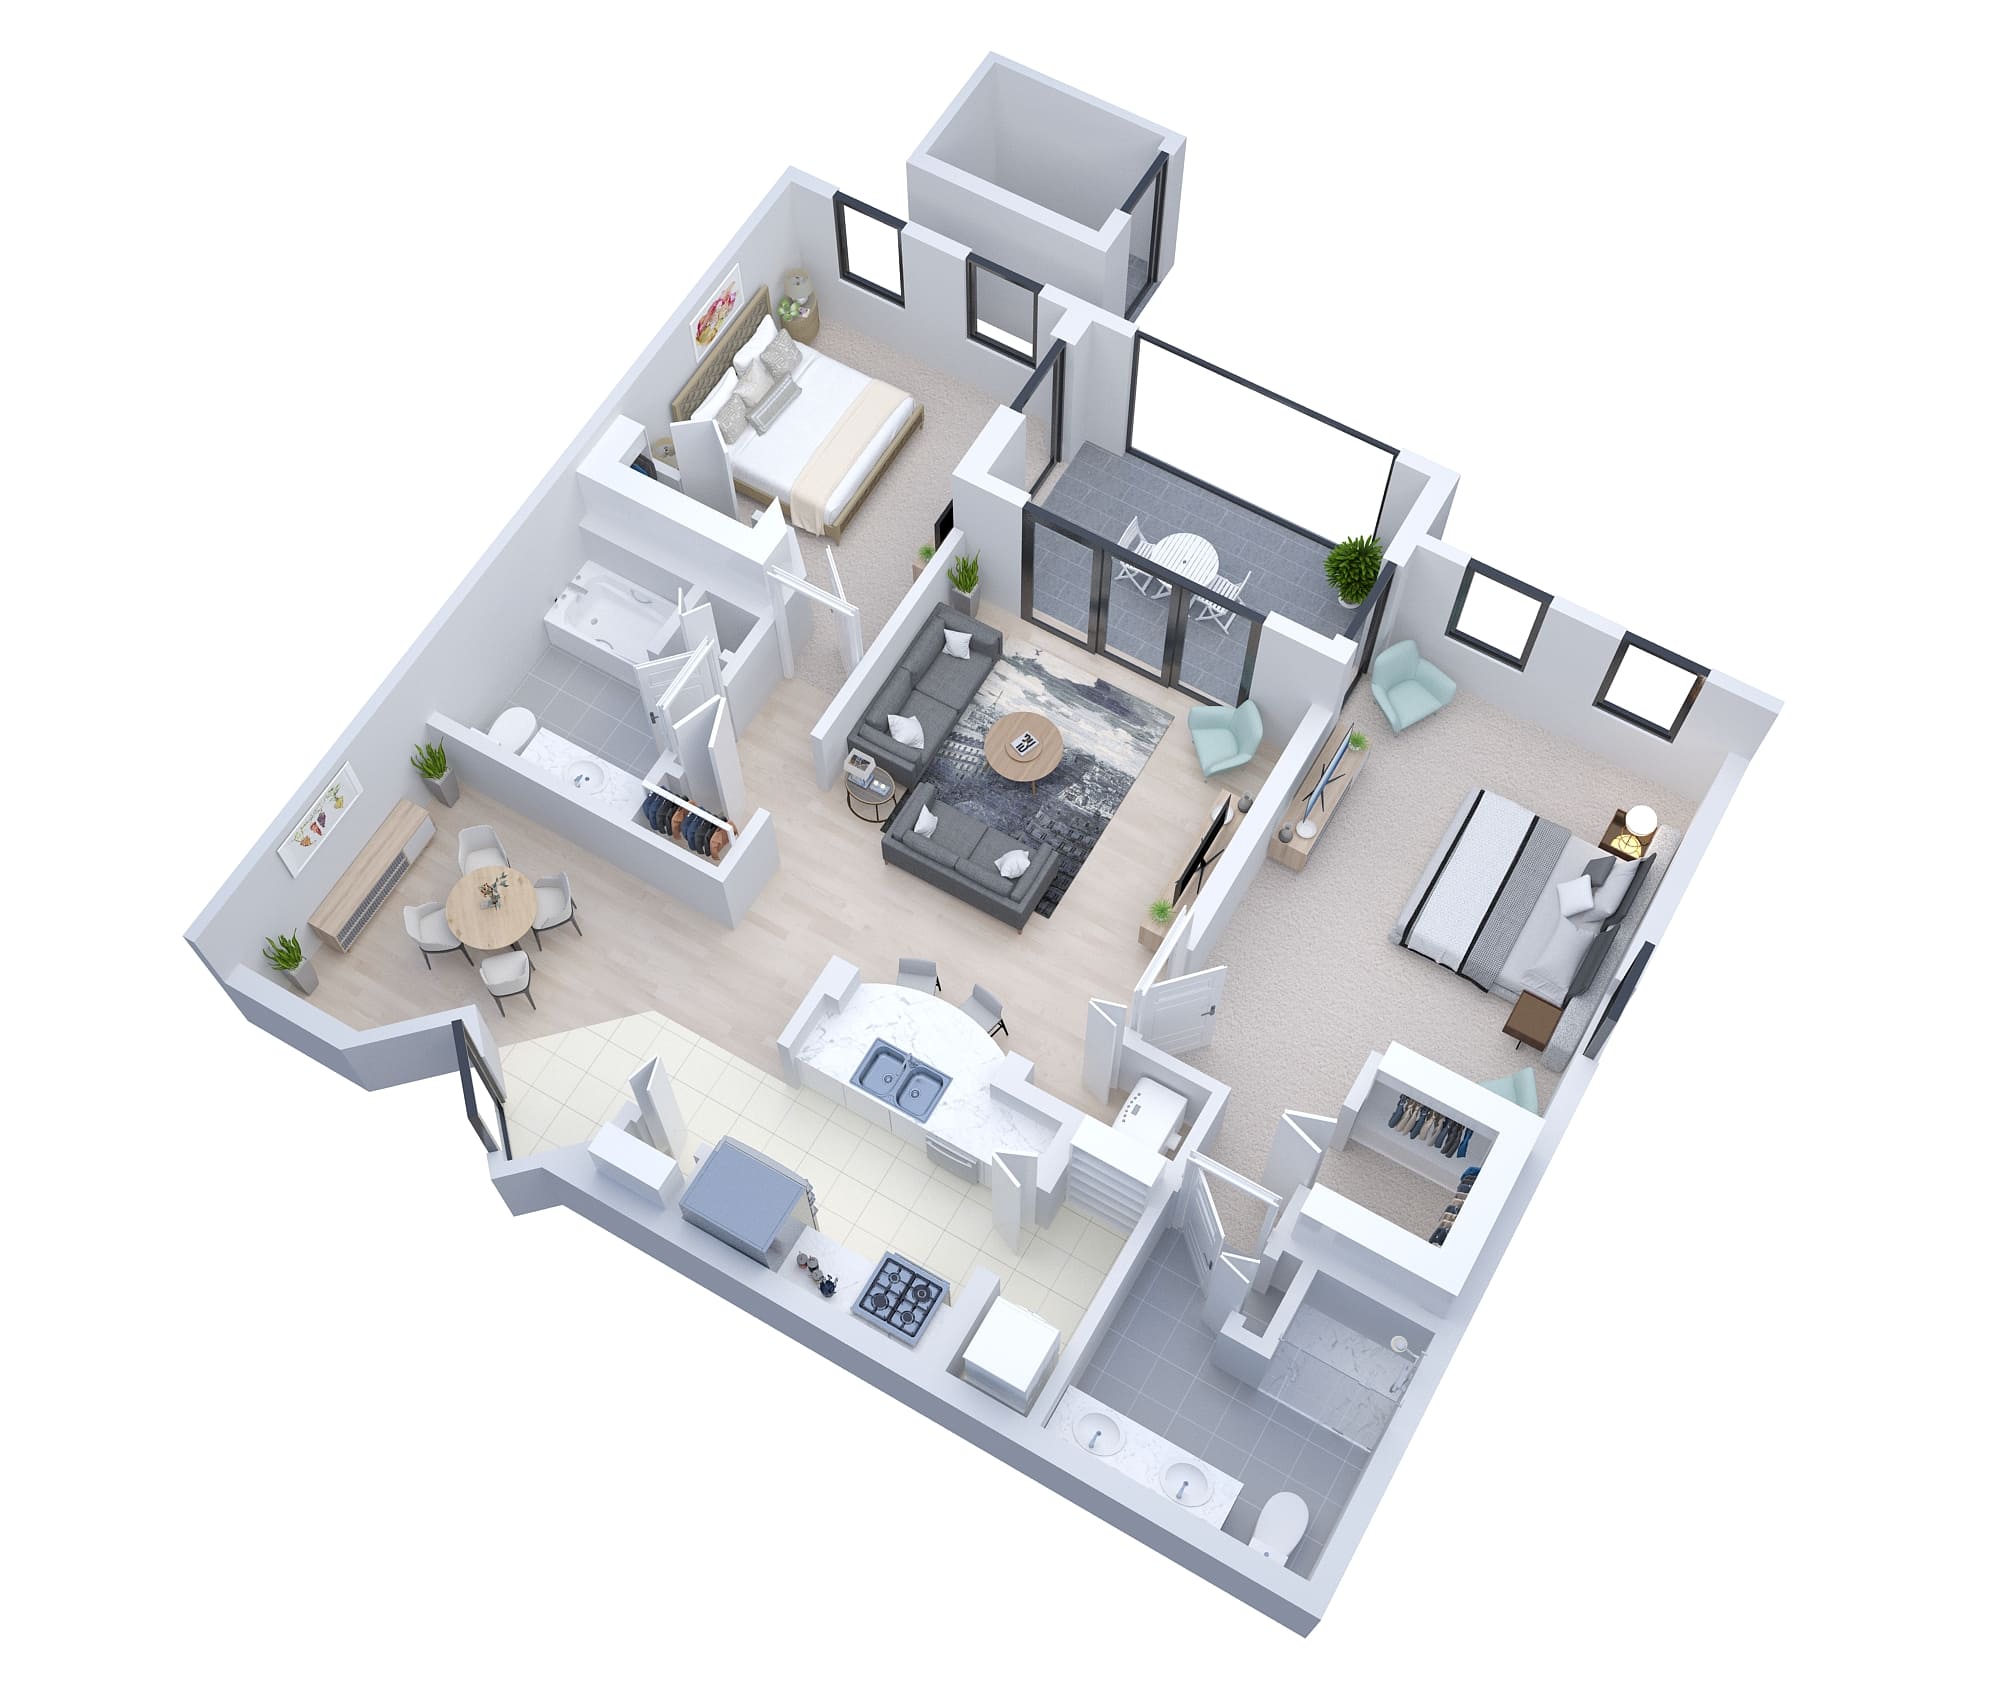 Essex - senior living floor plan